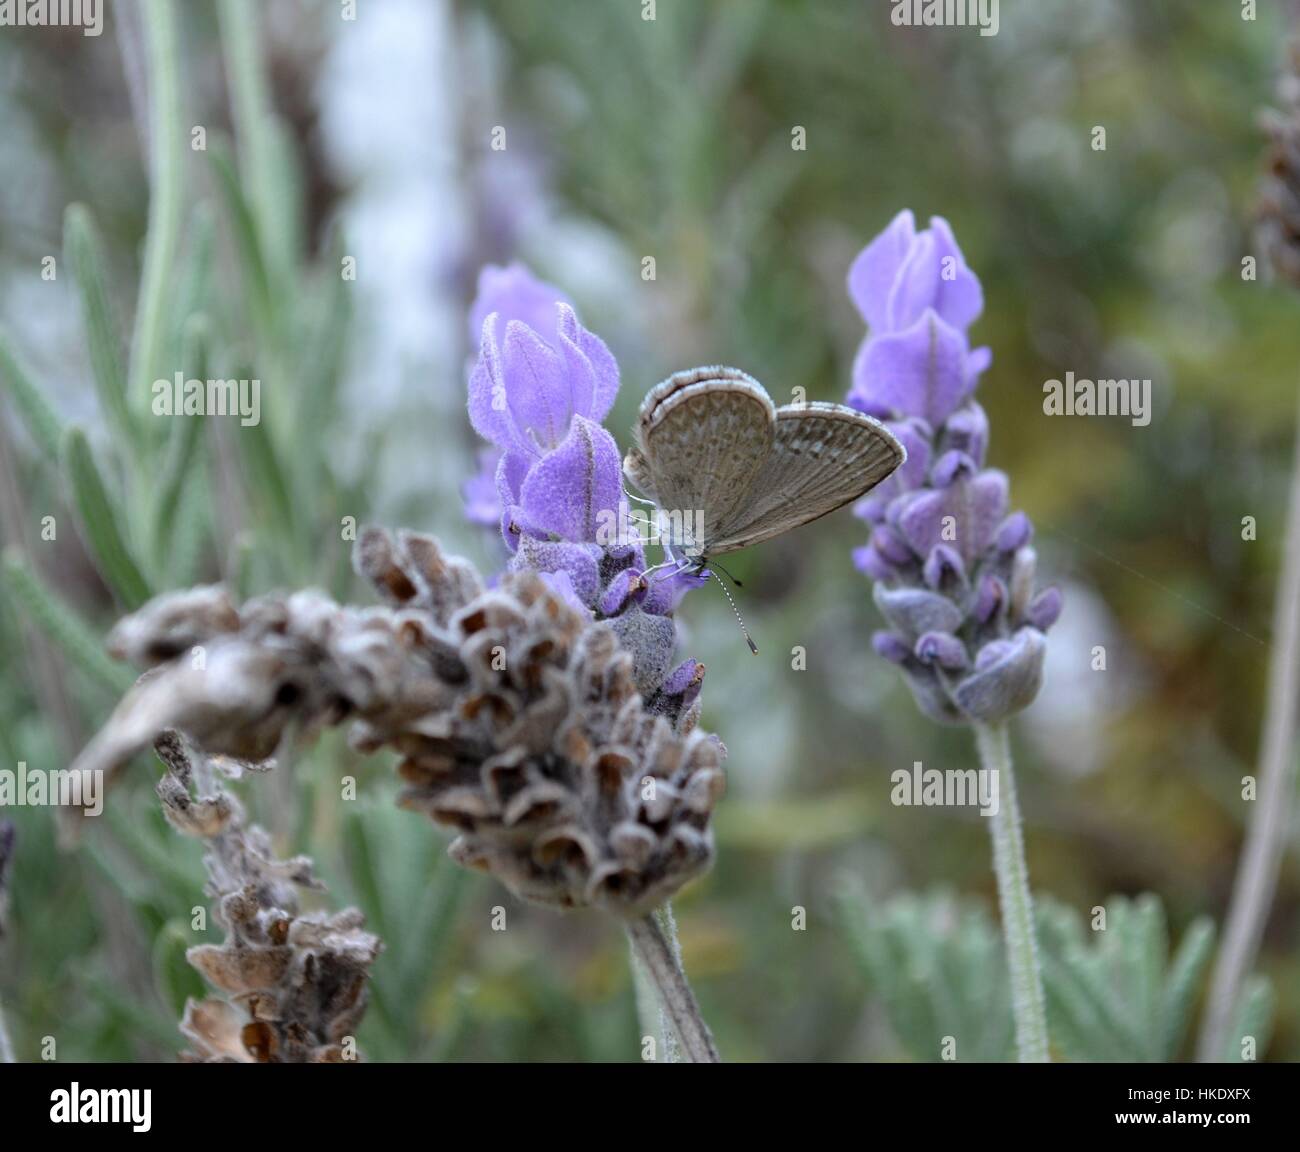 Lavender flower in detail Stock Photo